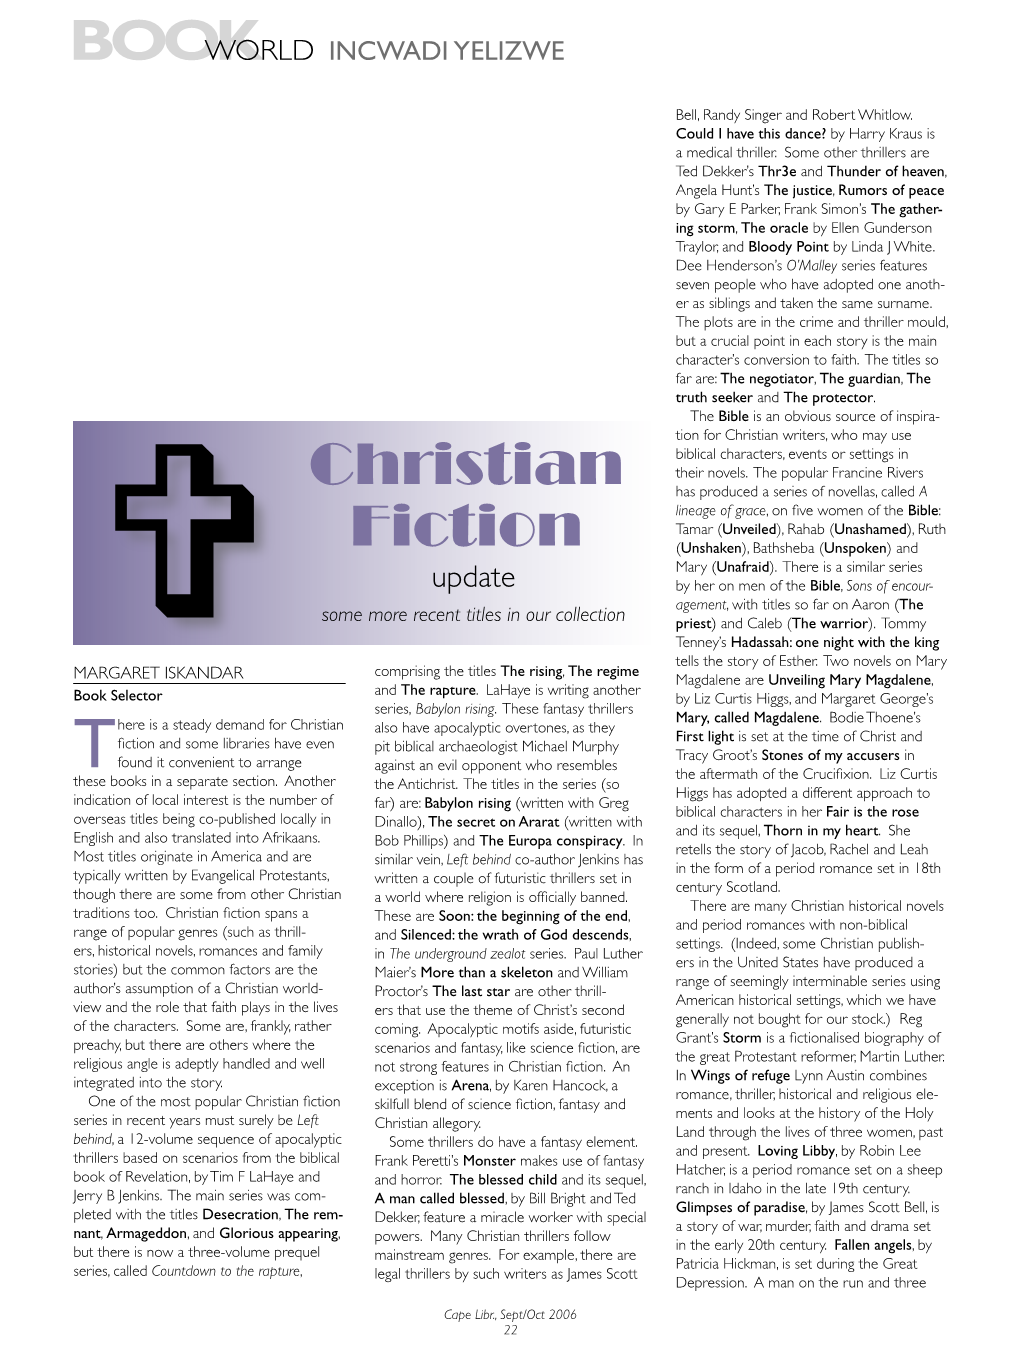 Christian Fiction